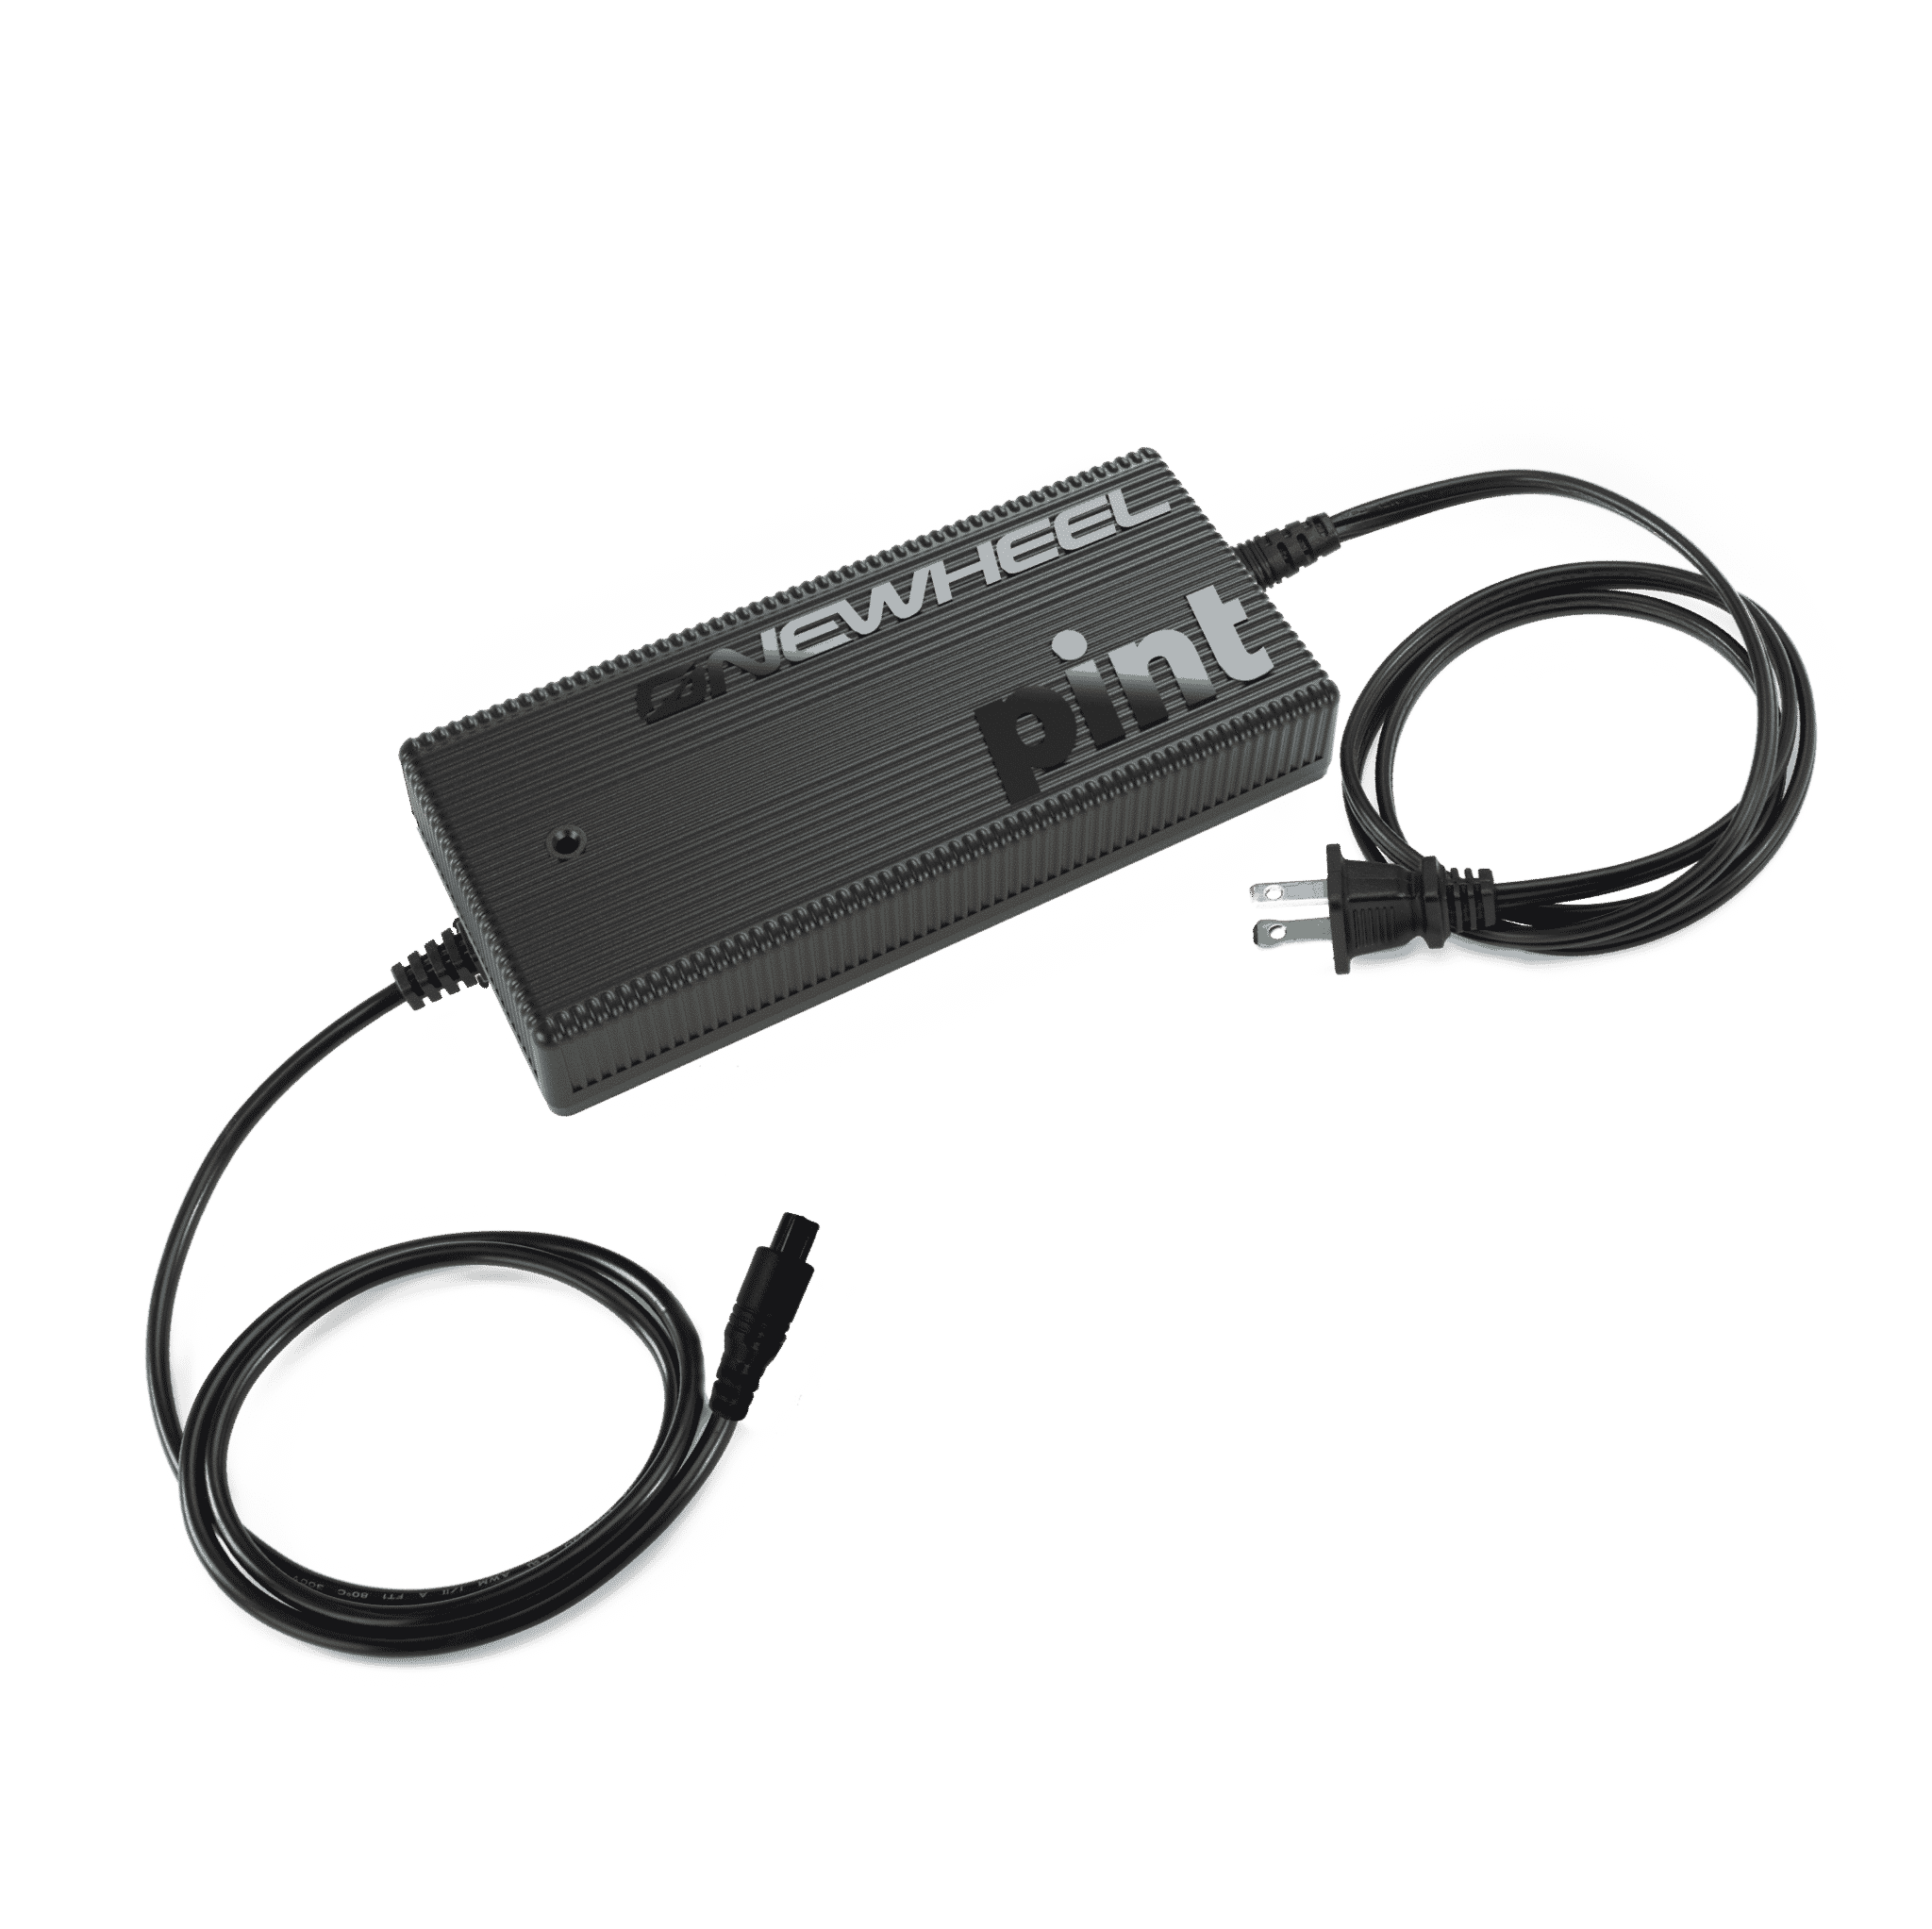 Onewheel Pint Ultracharger